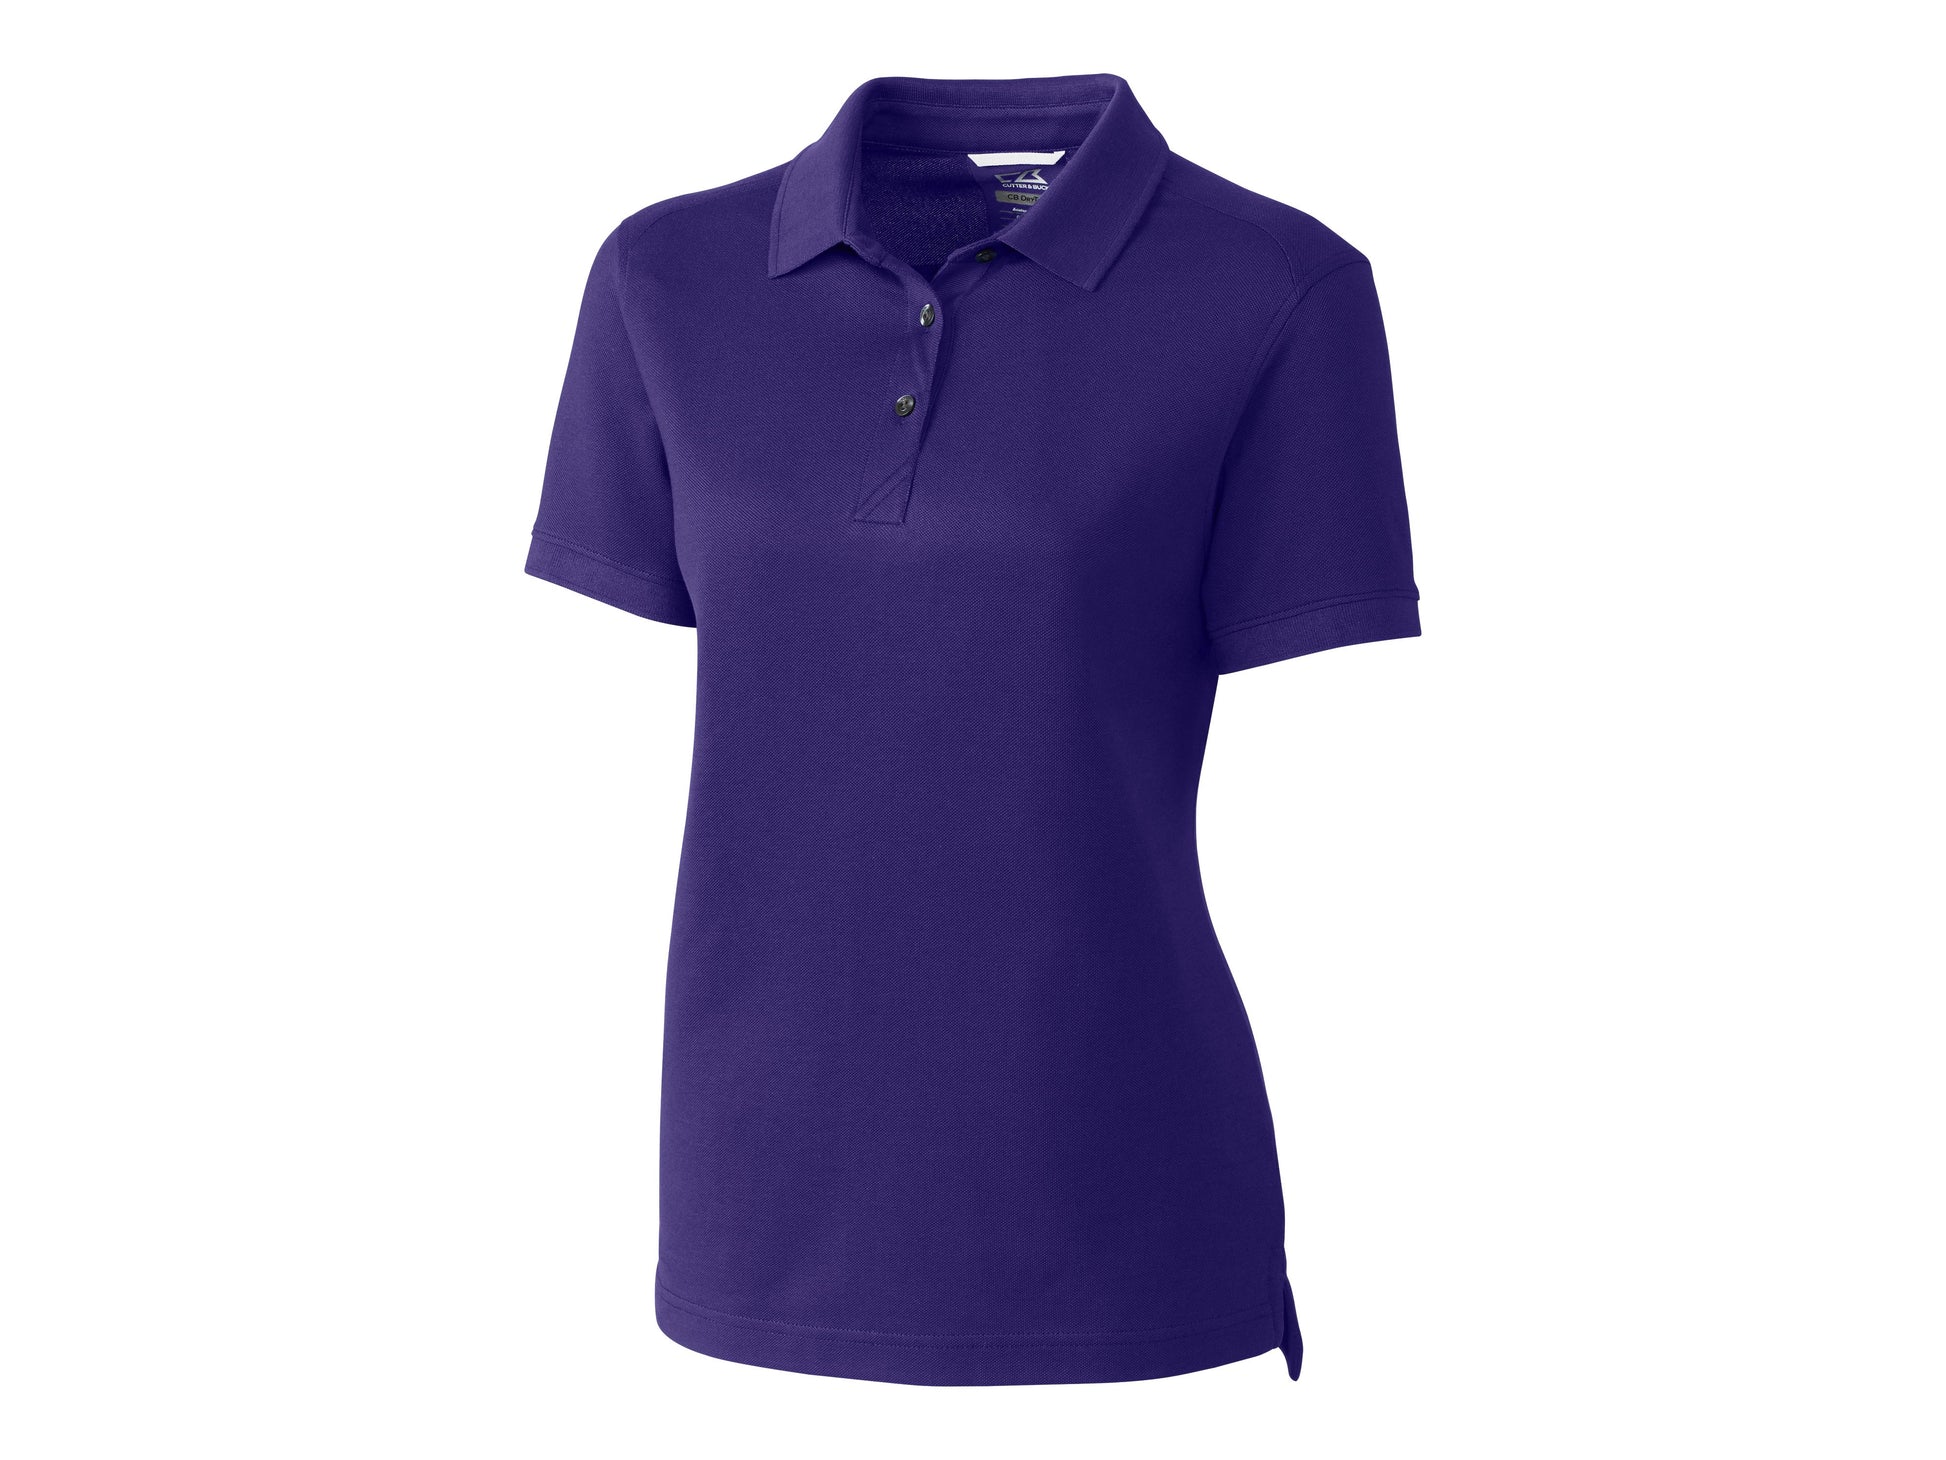 Cutter and Buck Shirts Advantage Polo (Women's Cut) - LCK08685 - College Purple